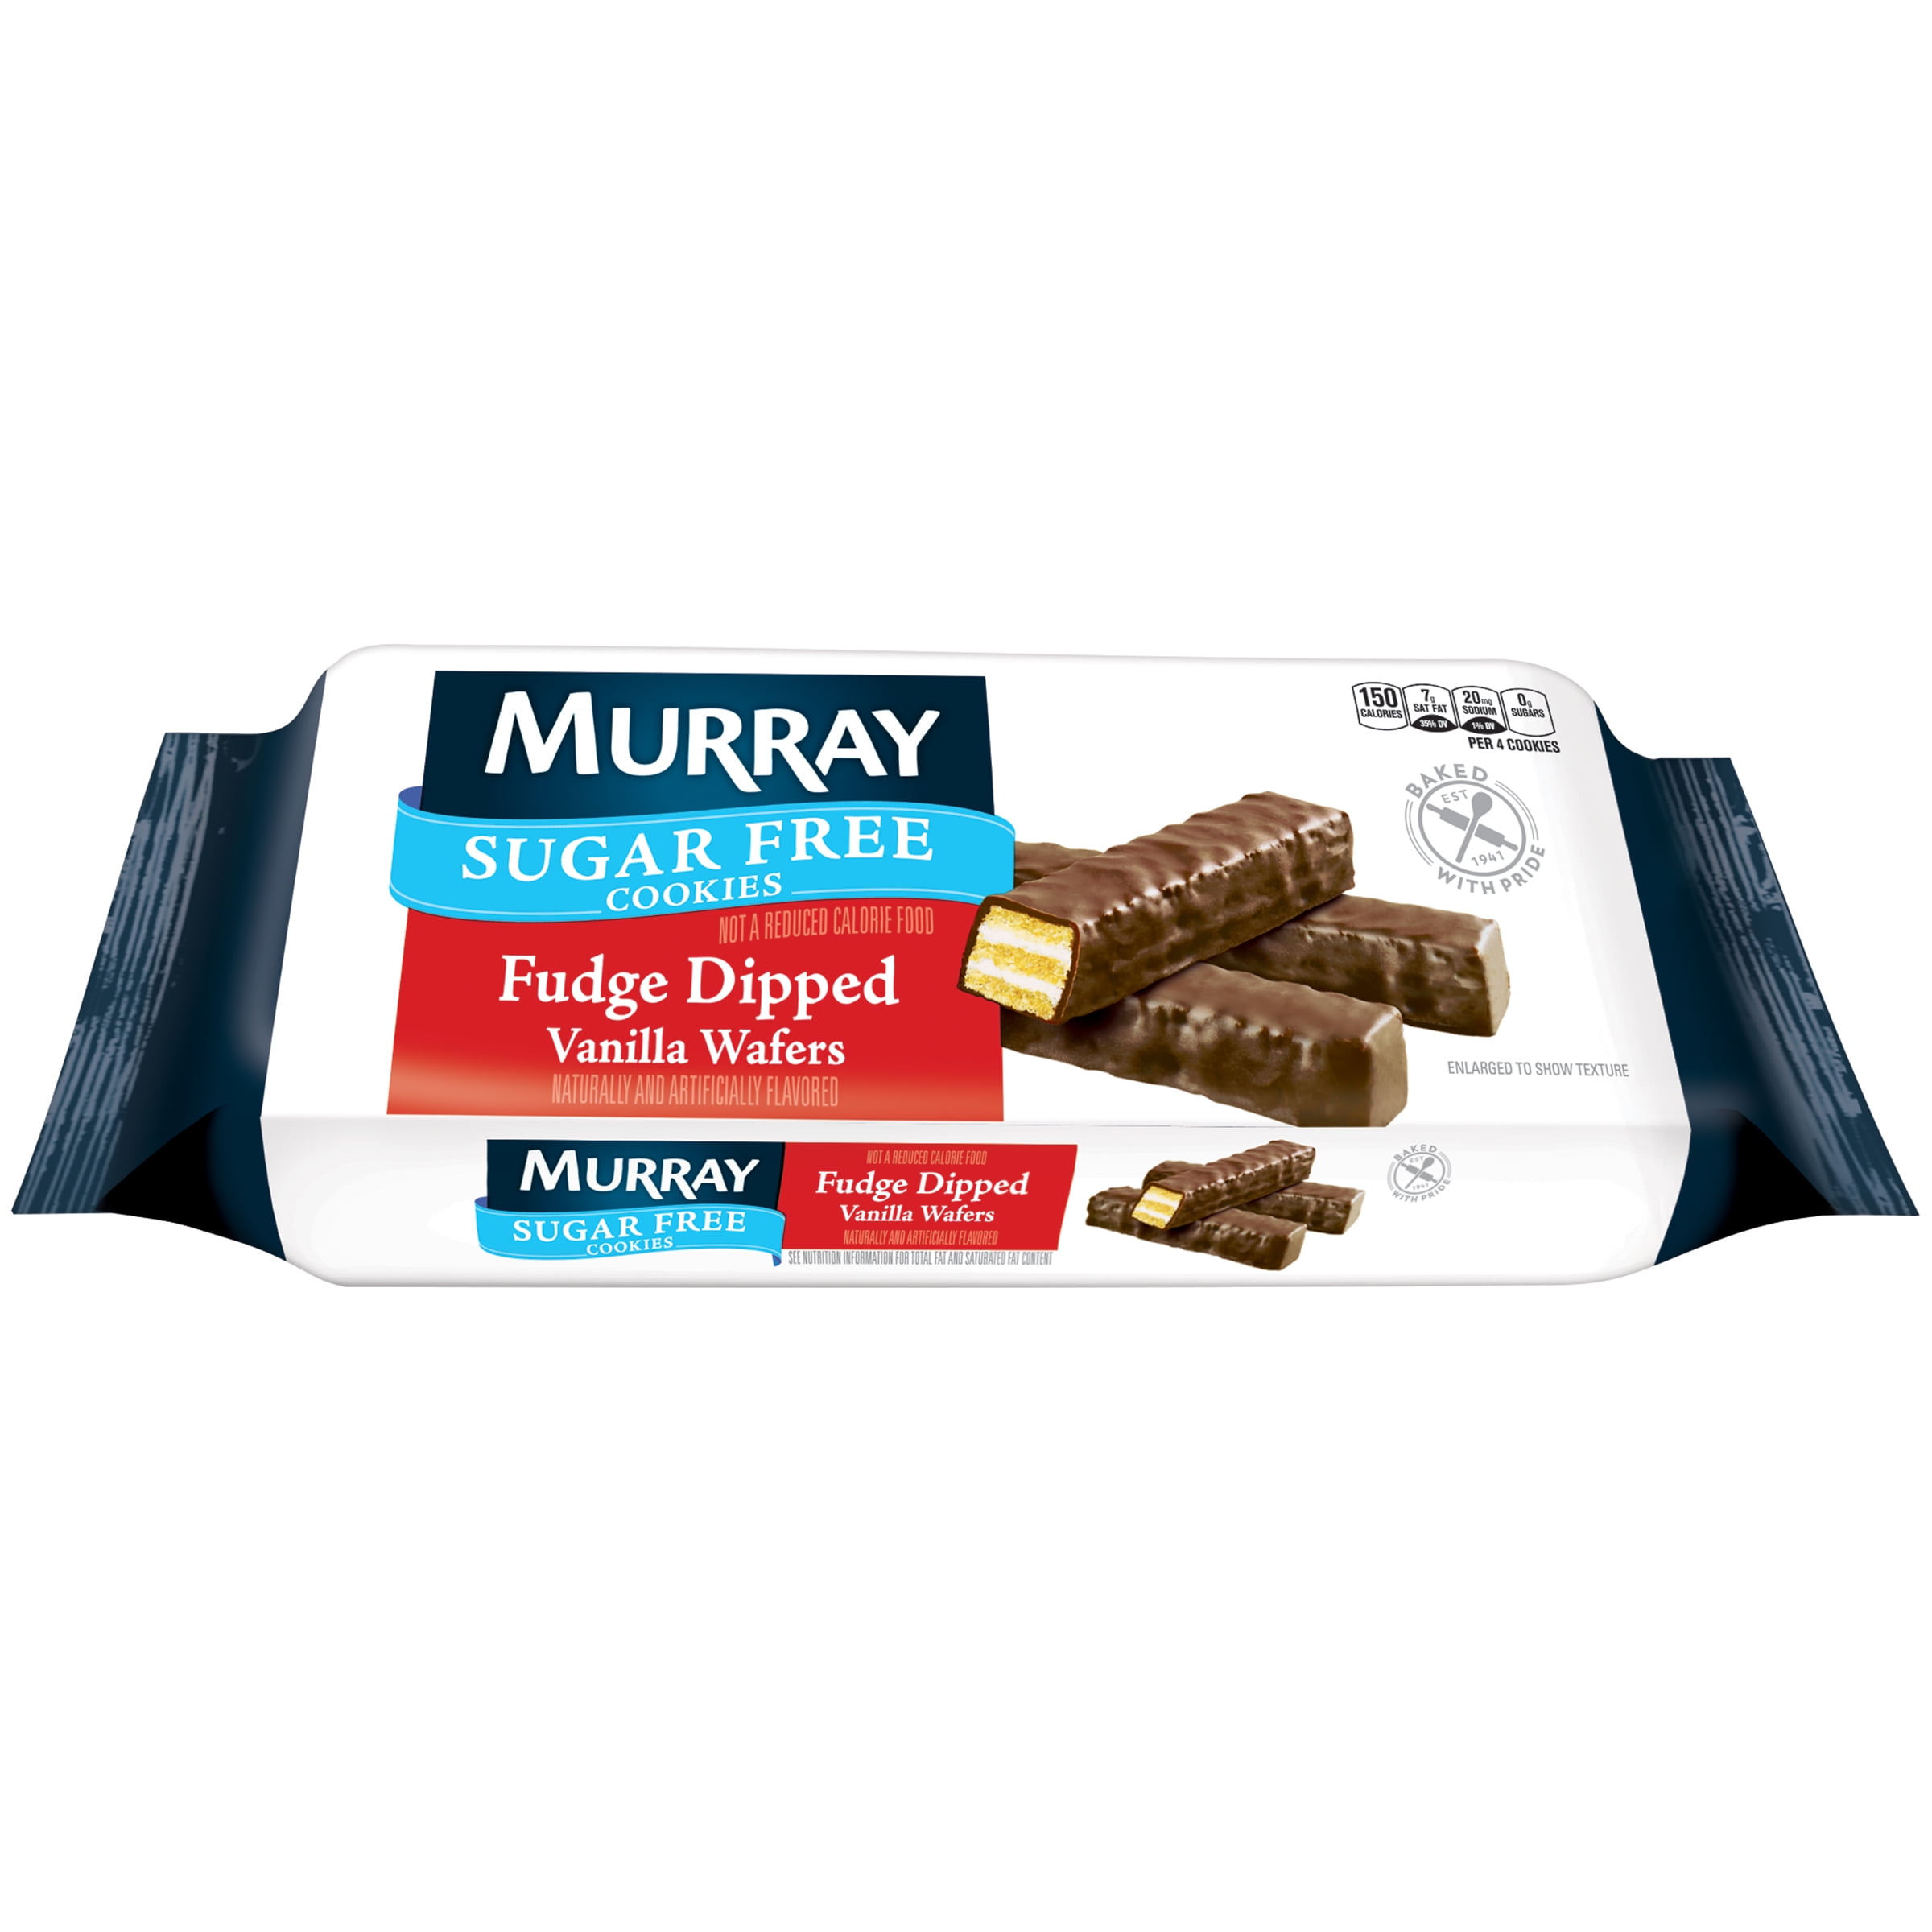 Murray Sugar Free Fudge Dipped Vanilla Wafer Cookies 5 5 Oz Walmart Com Walmart Com,What Is Frisee Carpet